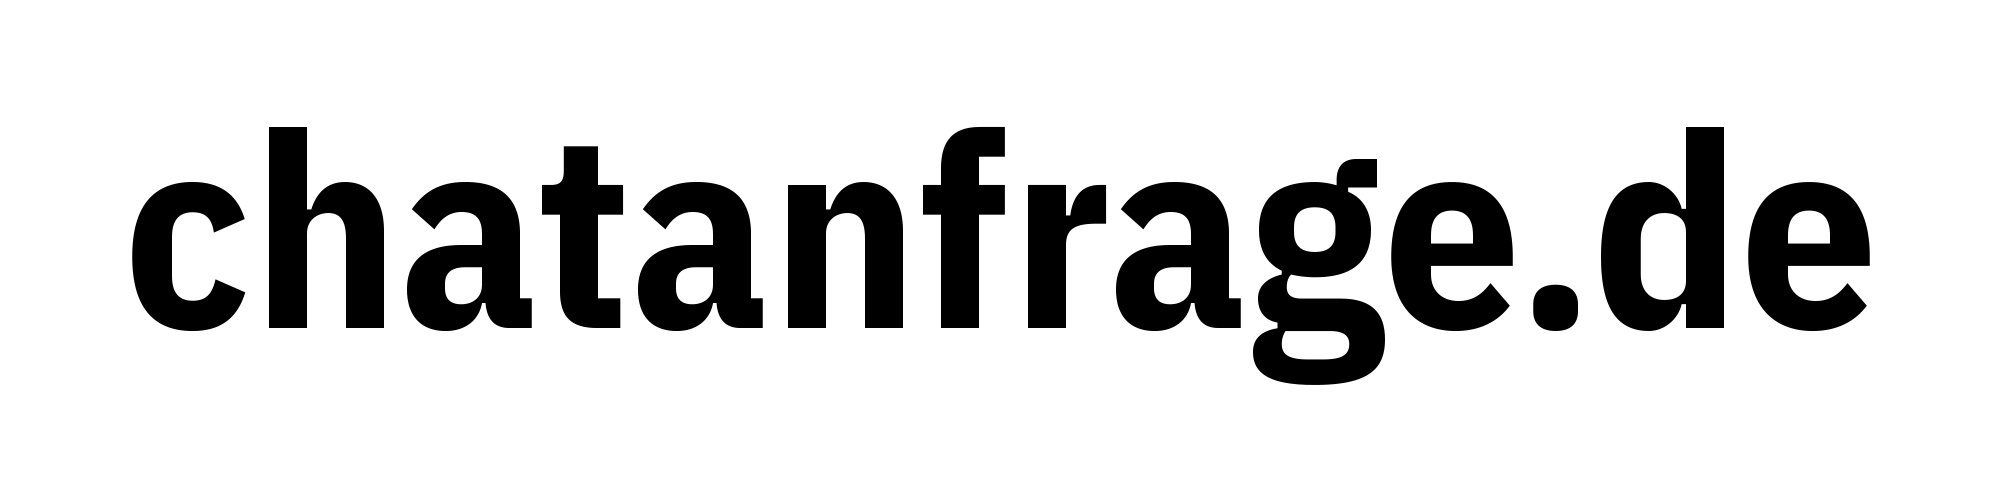 chatanfrage_logo